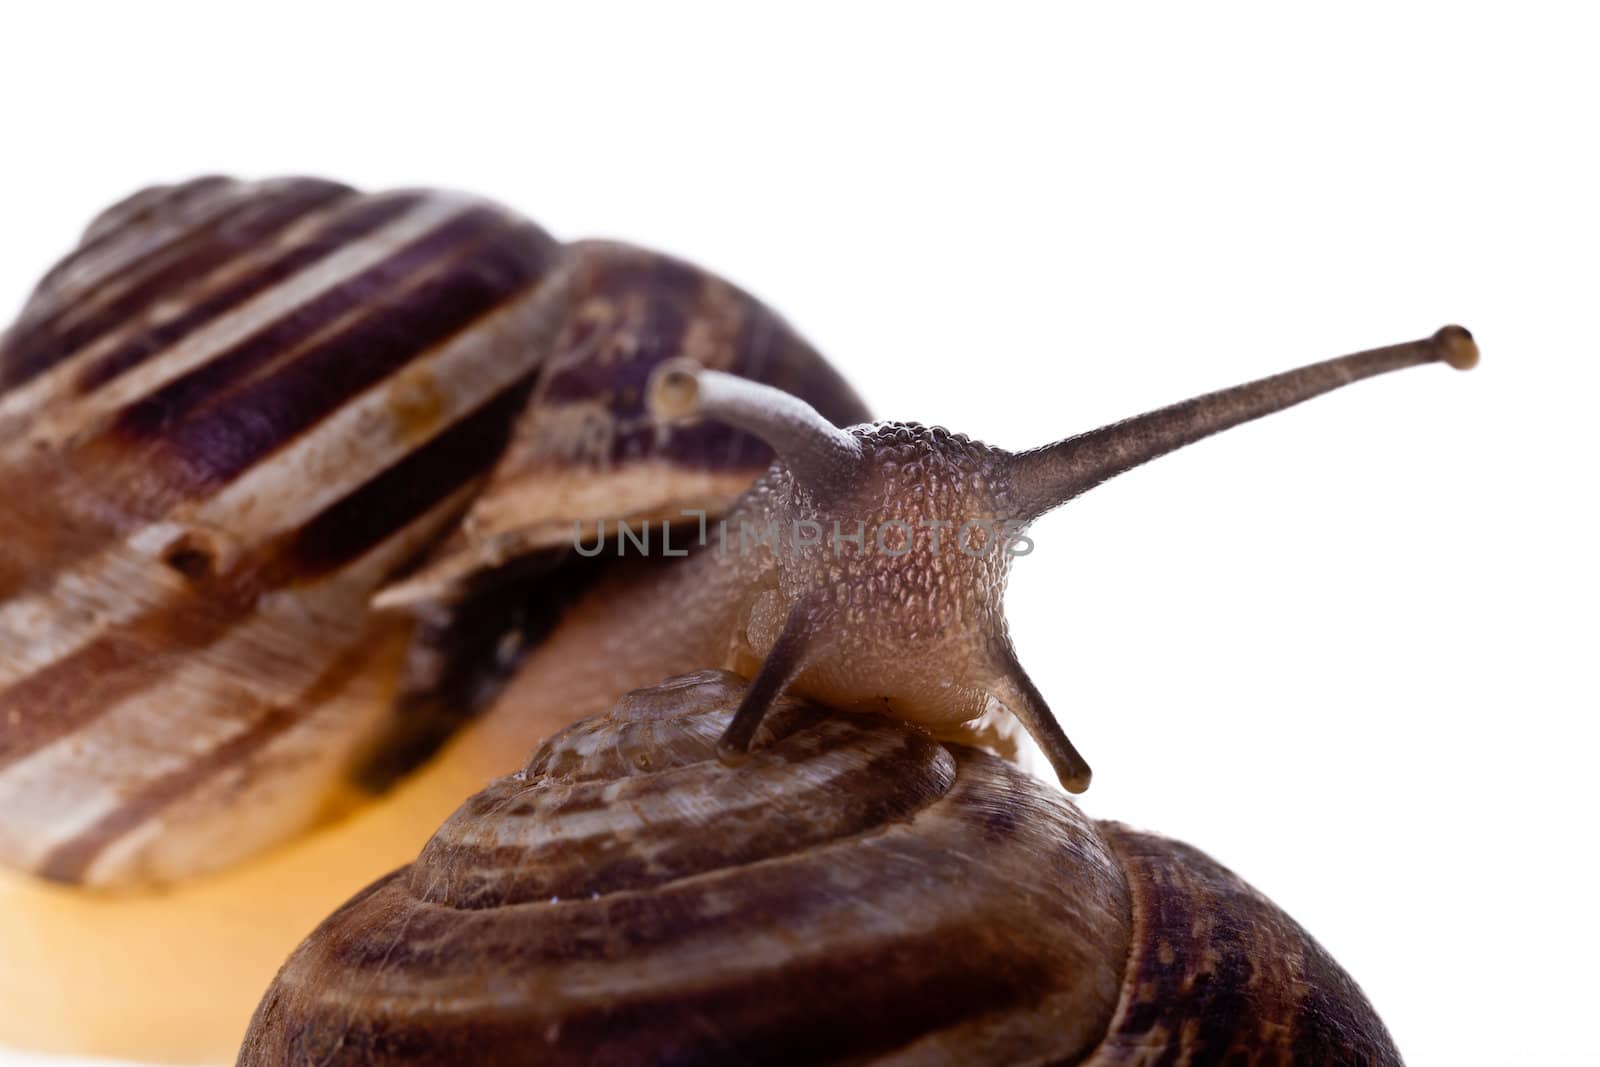 Crawling snails by dario_lo_presti